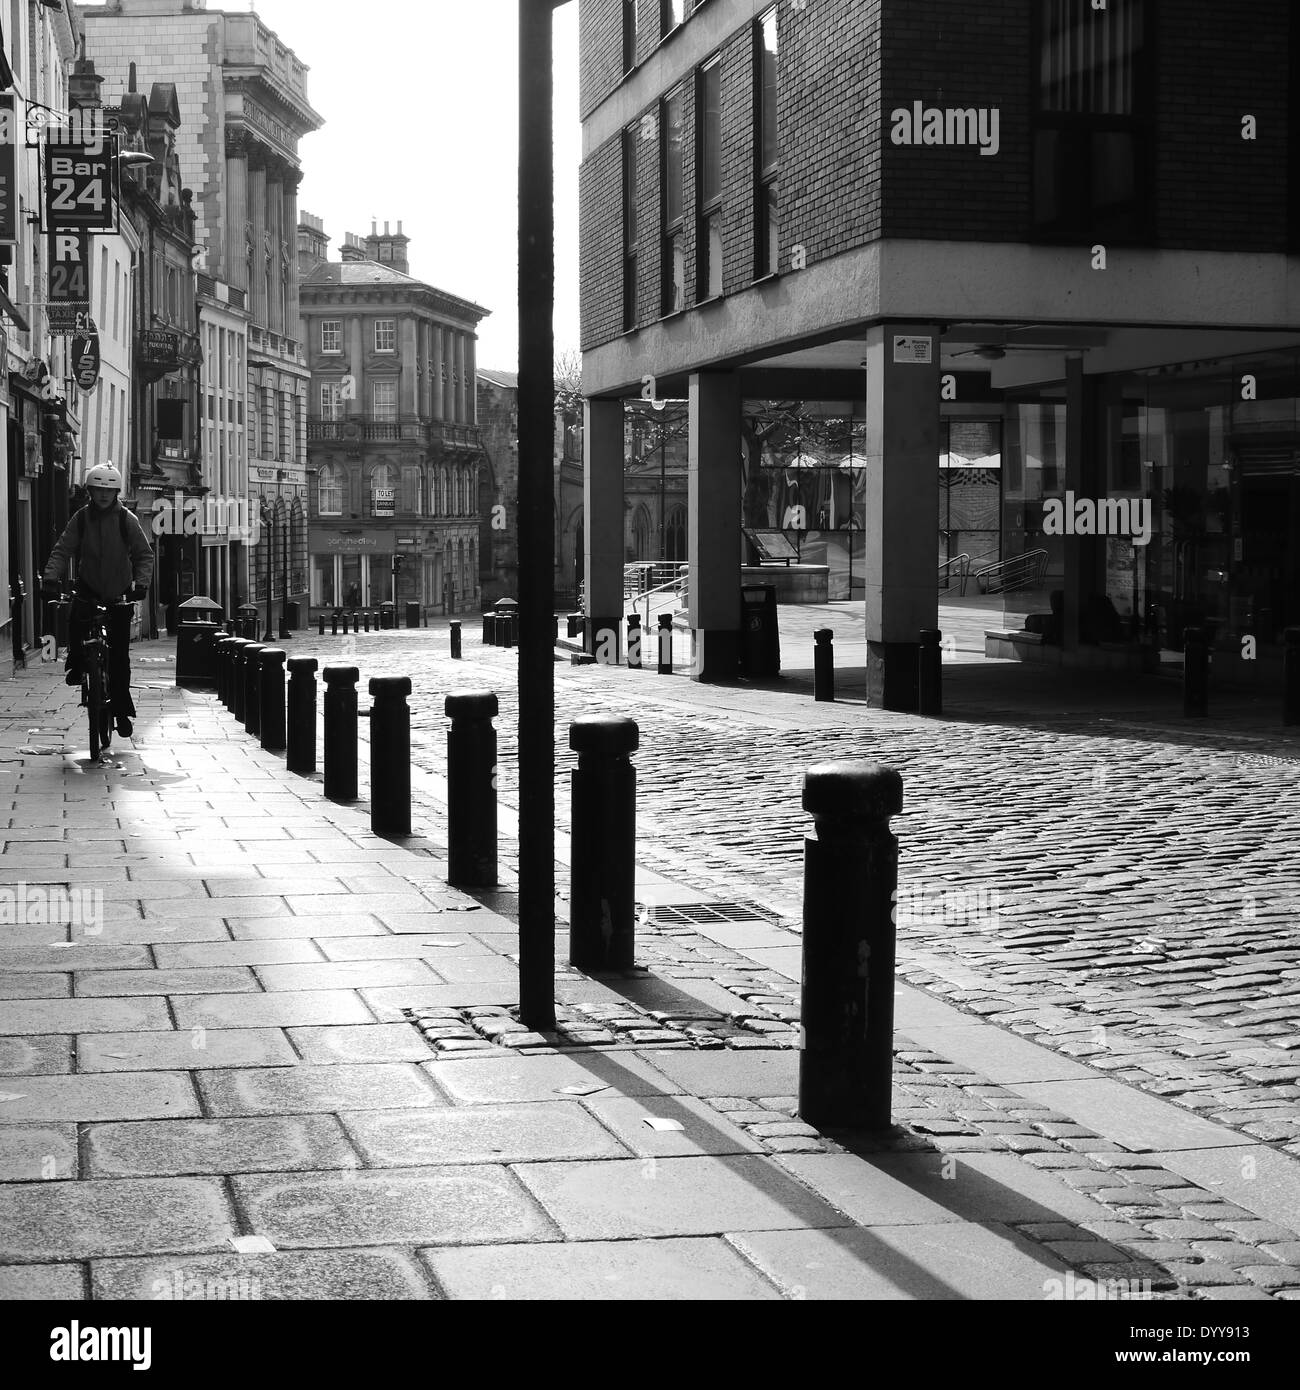 Stadtlandschaft Bild des gepflasterten Stadtstraße in Monochrom, "Film Noir" / hell-dunkel-Stil - Stoffmarkt, Newcastle Upon Tyne Stockfoto